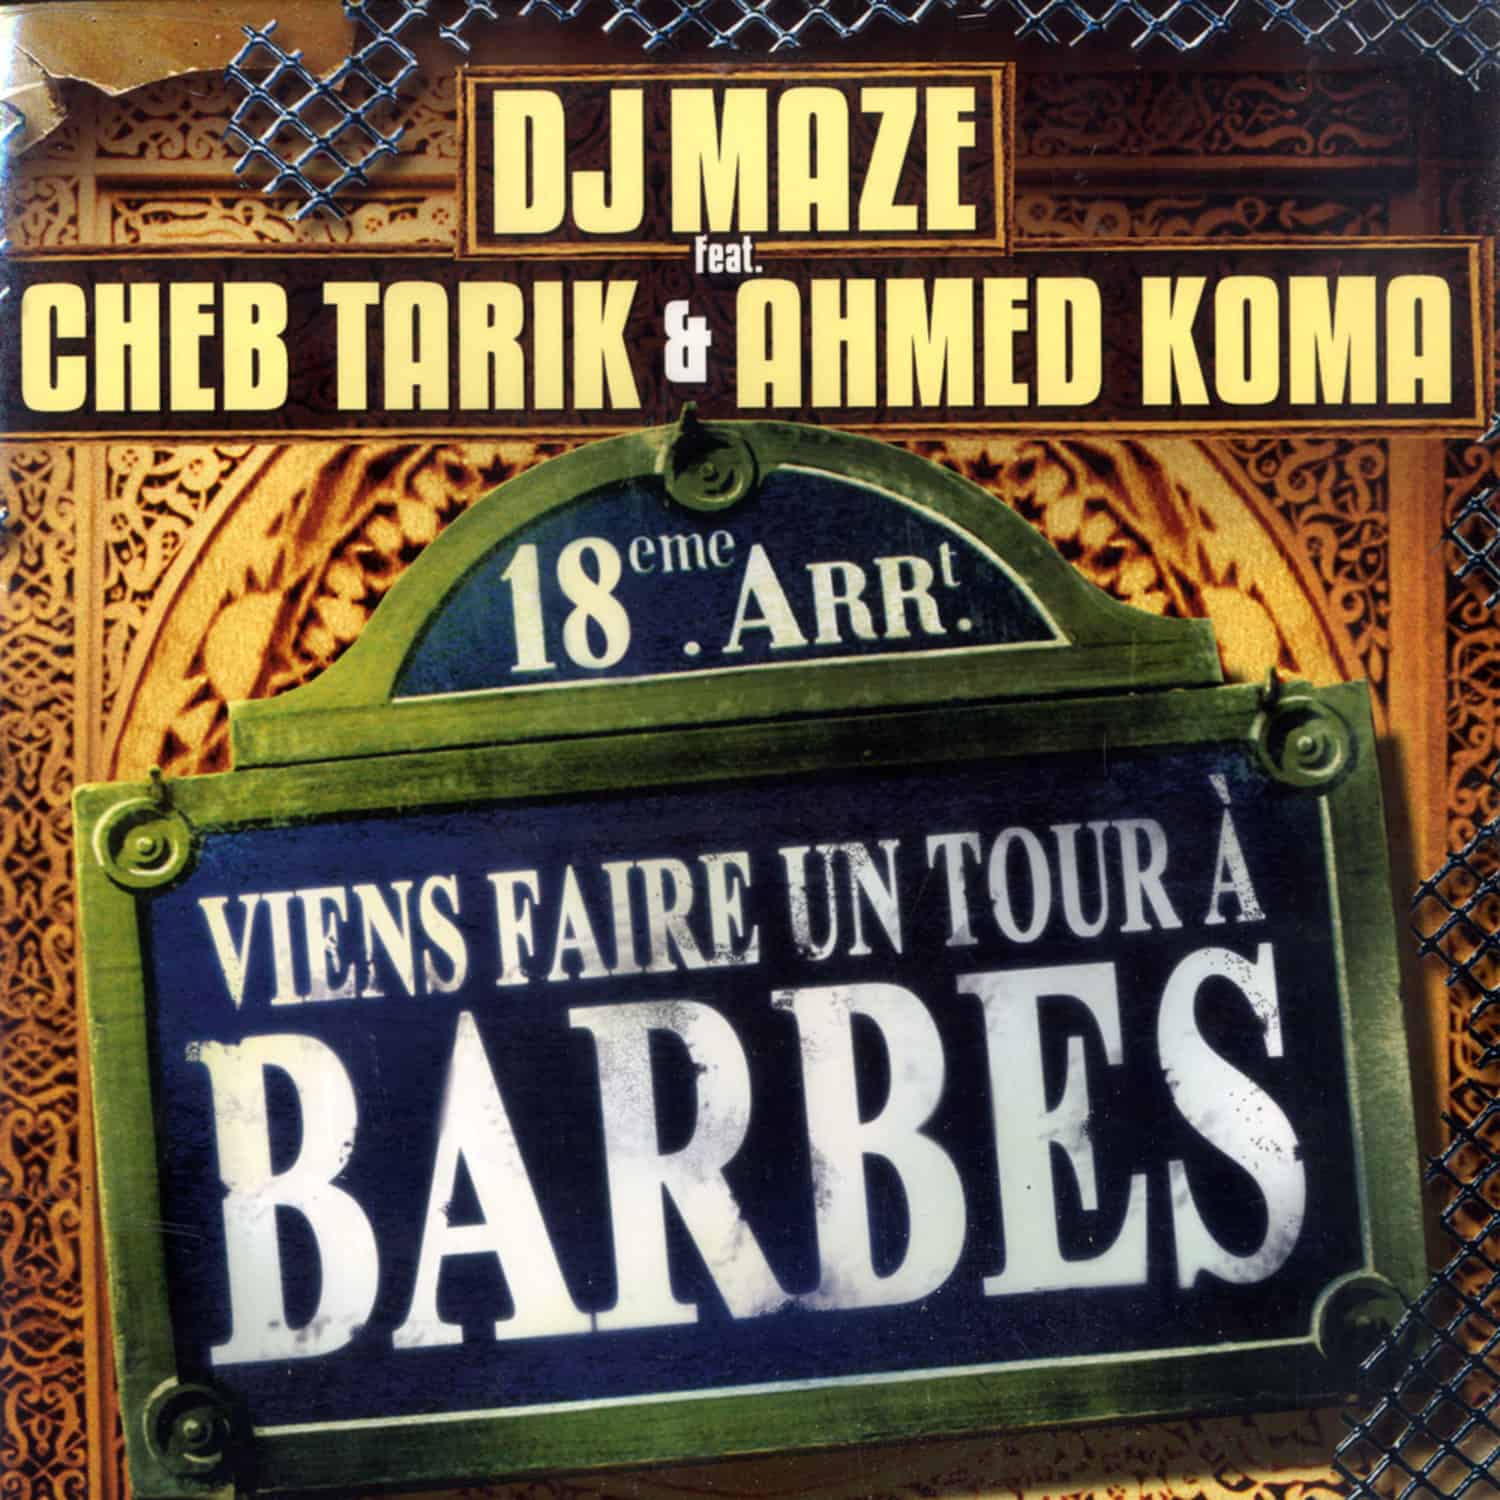 DJ Maze feat. Cheb Tarik & Ahmed Koma - VIENS FAIRE UN TOUR A BARBES